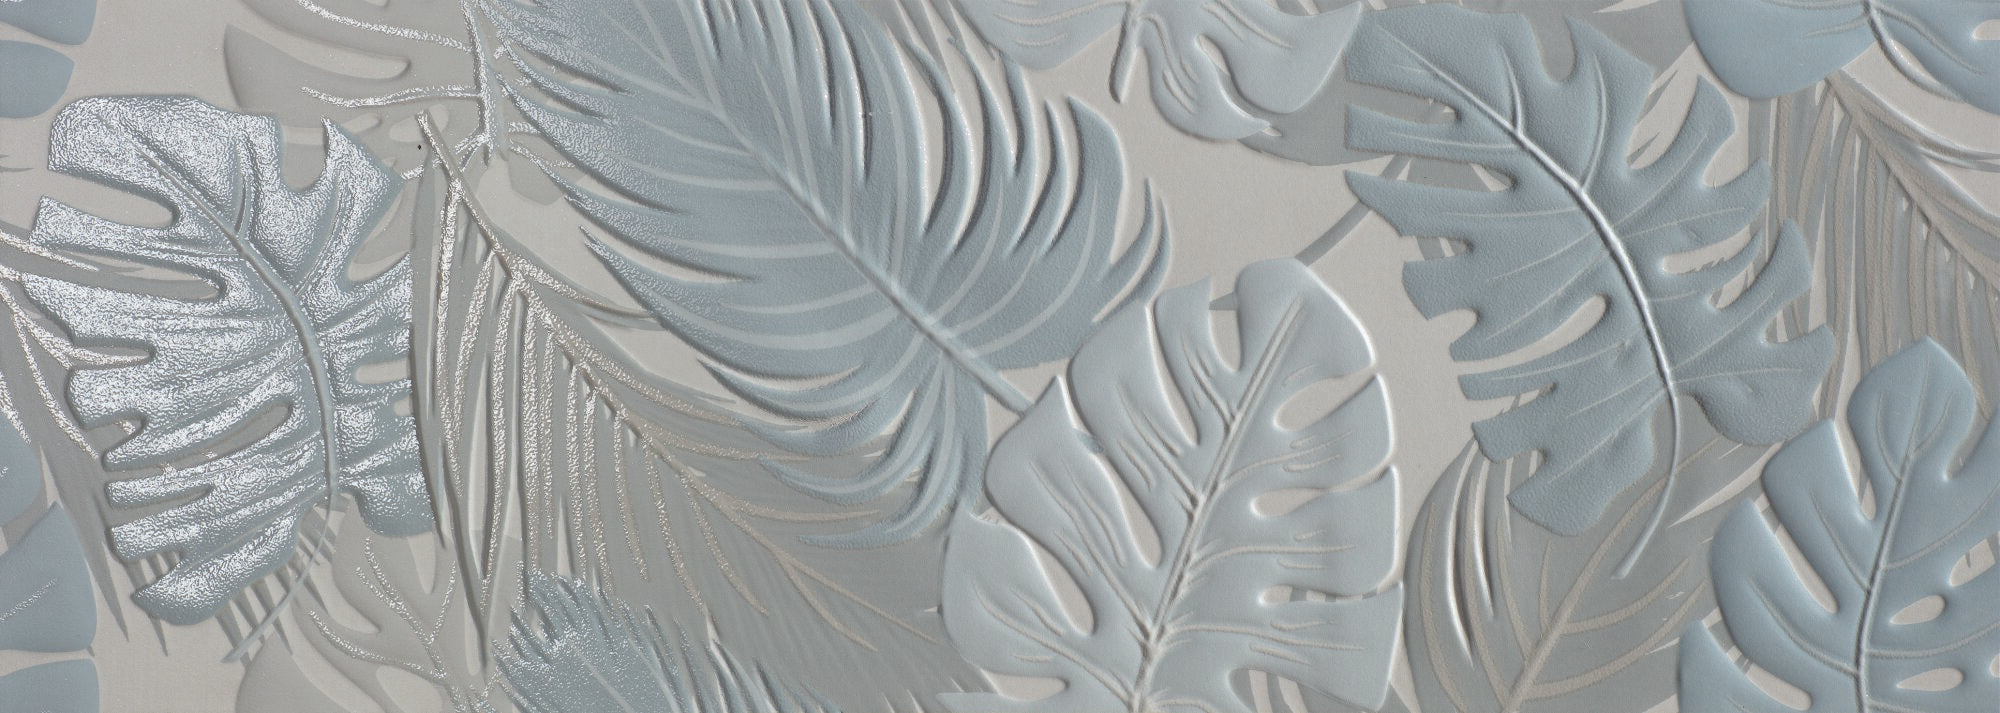 Kona 13x36 Palm Cool Decorative Textured Ceramic Tile - Samples